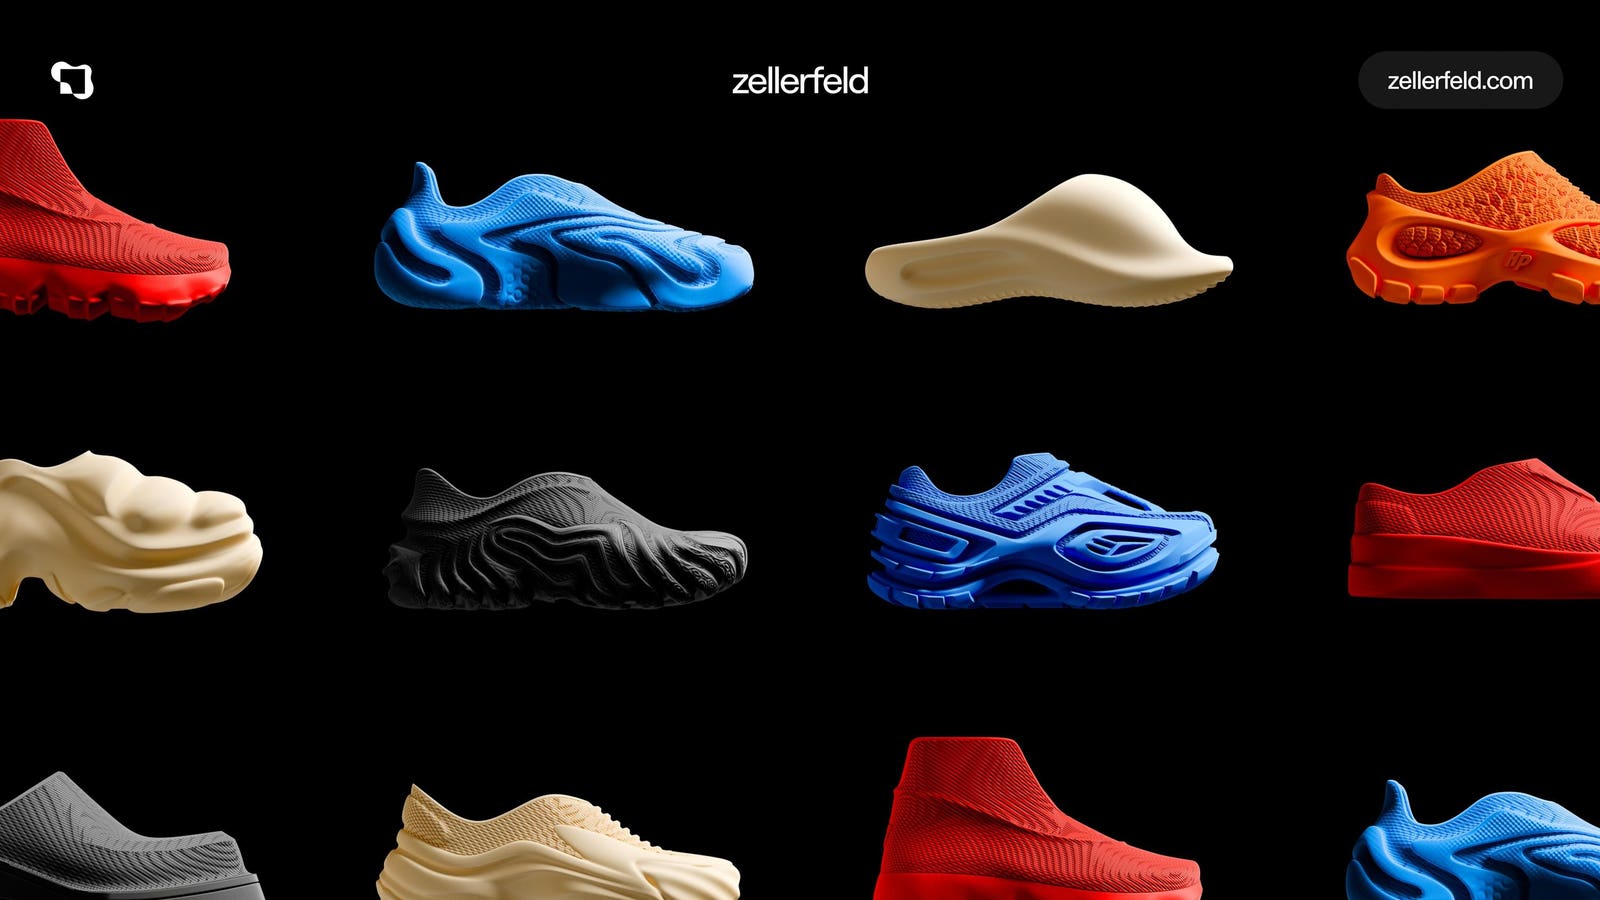 Zellerfeld Launches Revolutionary 3D-Printing Footwear Platform